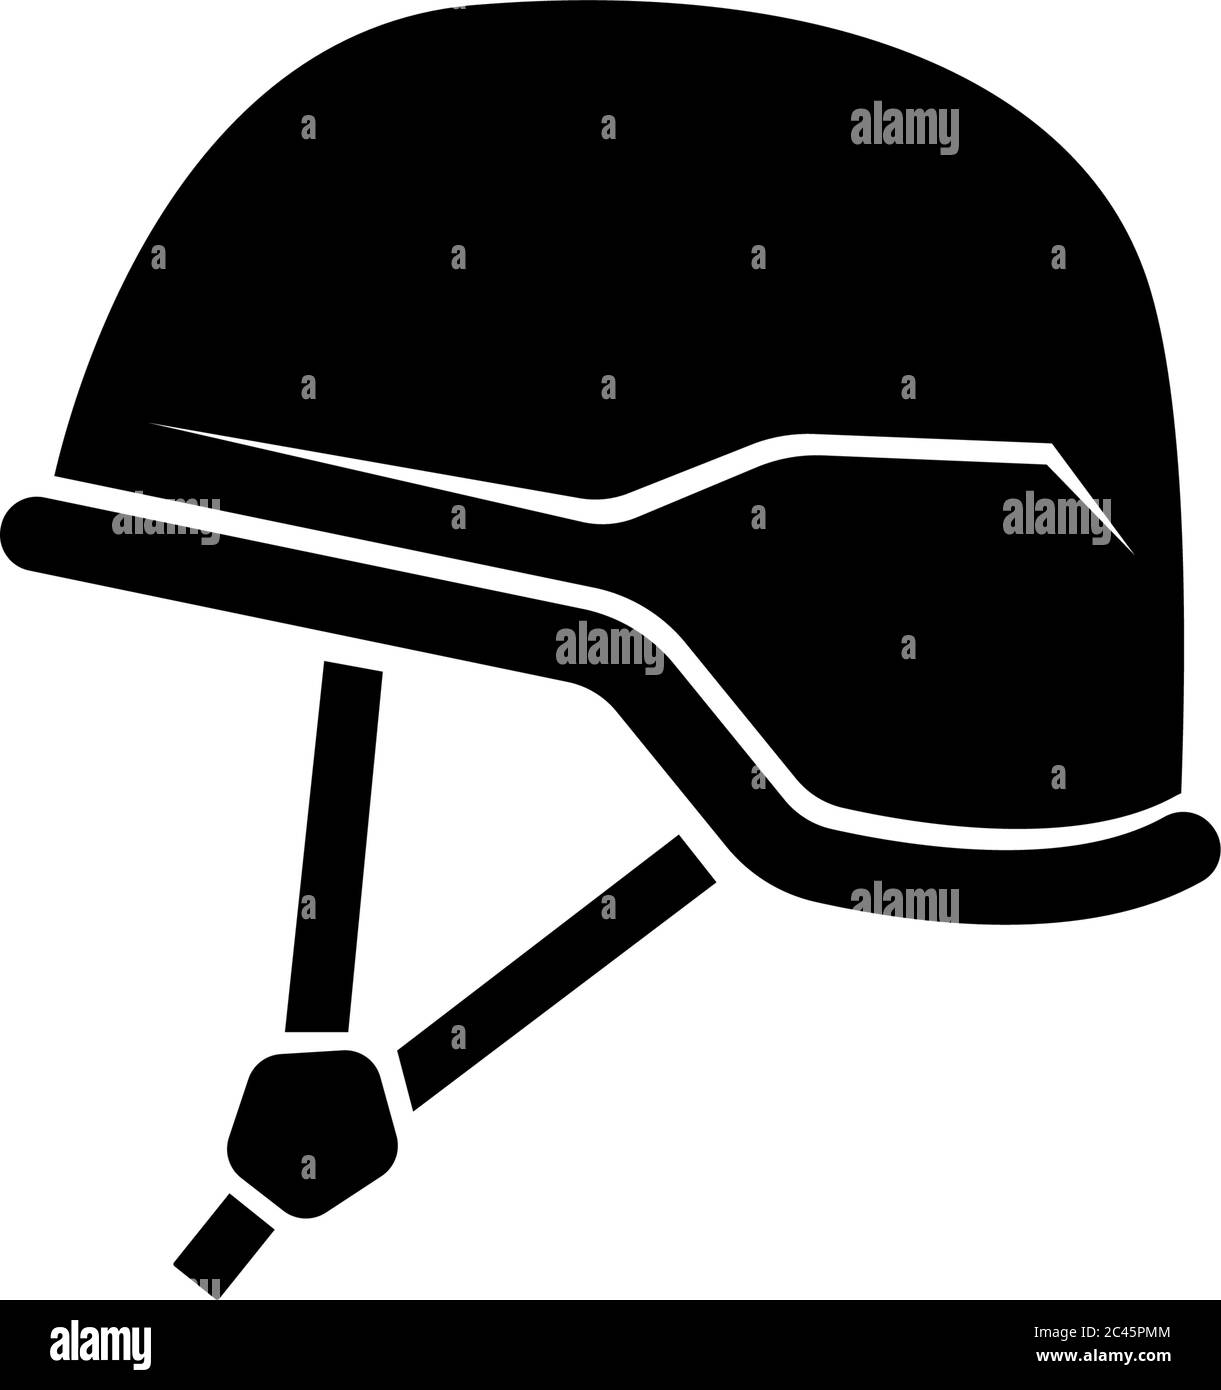 Soldier Helmet, Army Armor, Military Uniform. Flat Vector Icon illustration. Simple black symbol on white background. Soldier Helmet, Army Armor sign Stock Vector